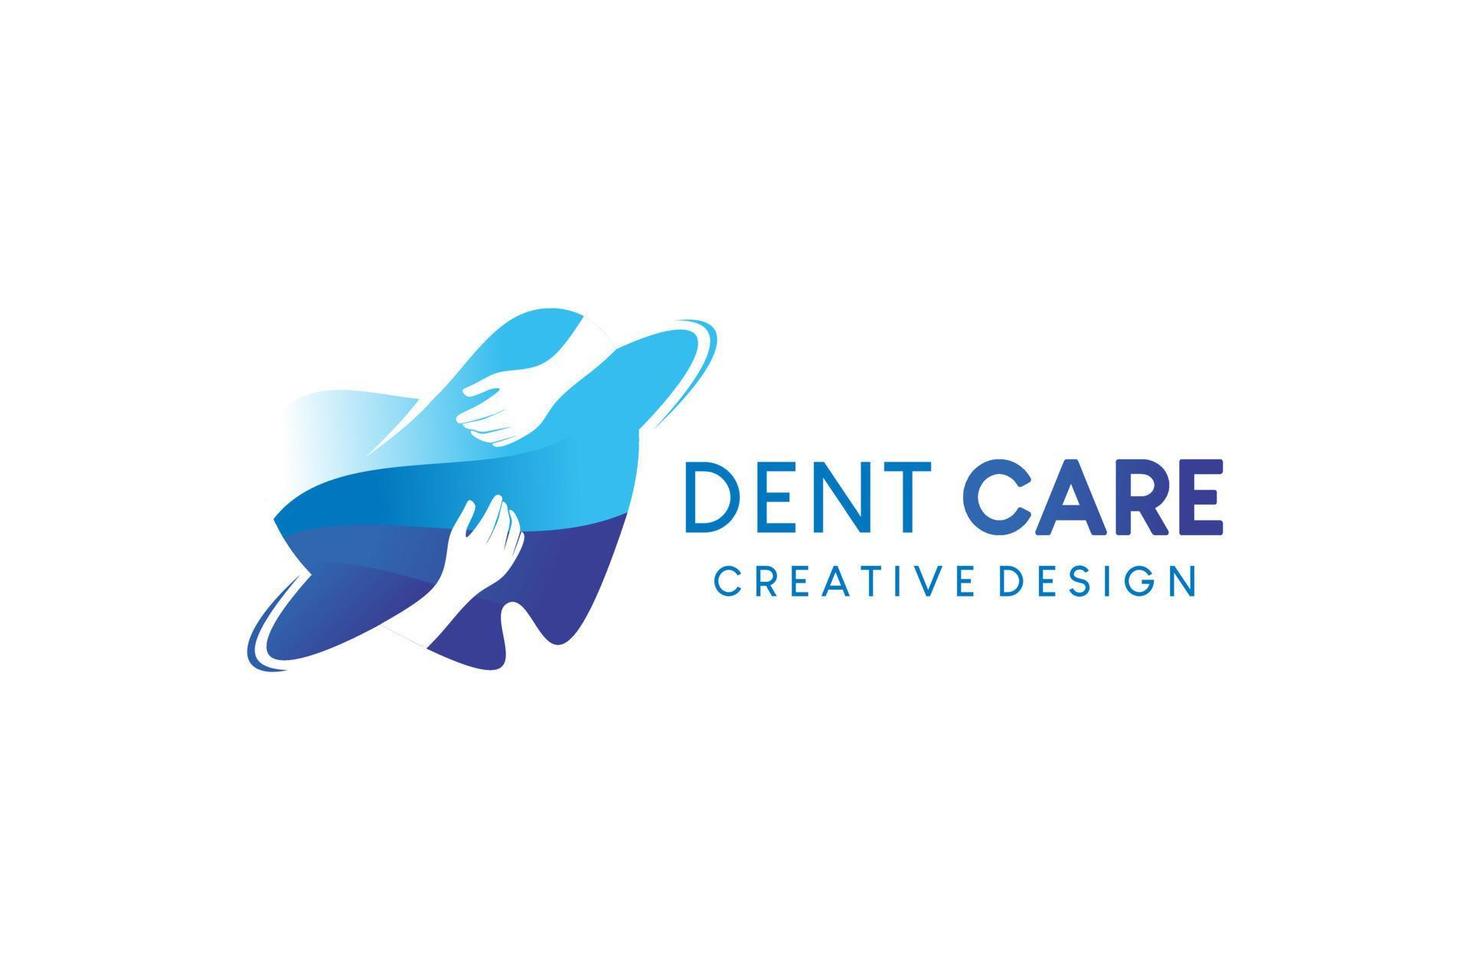 Dental care logo design, dental clinic, teeth icon in hugging hands style vector